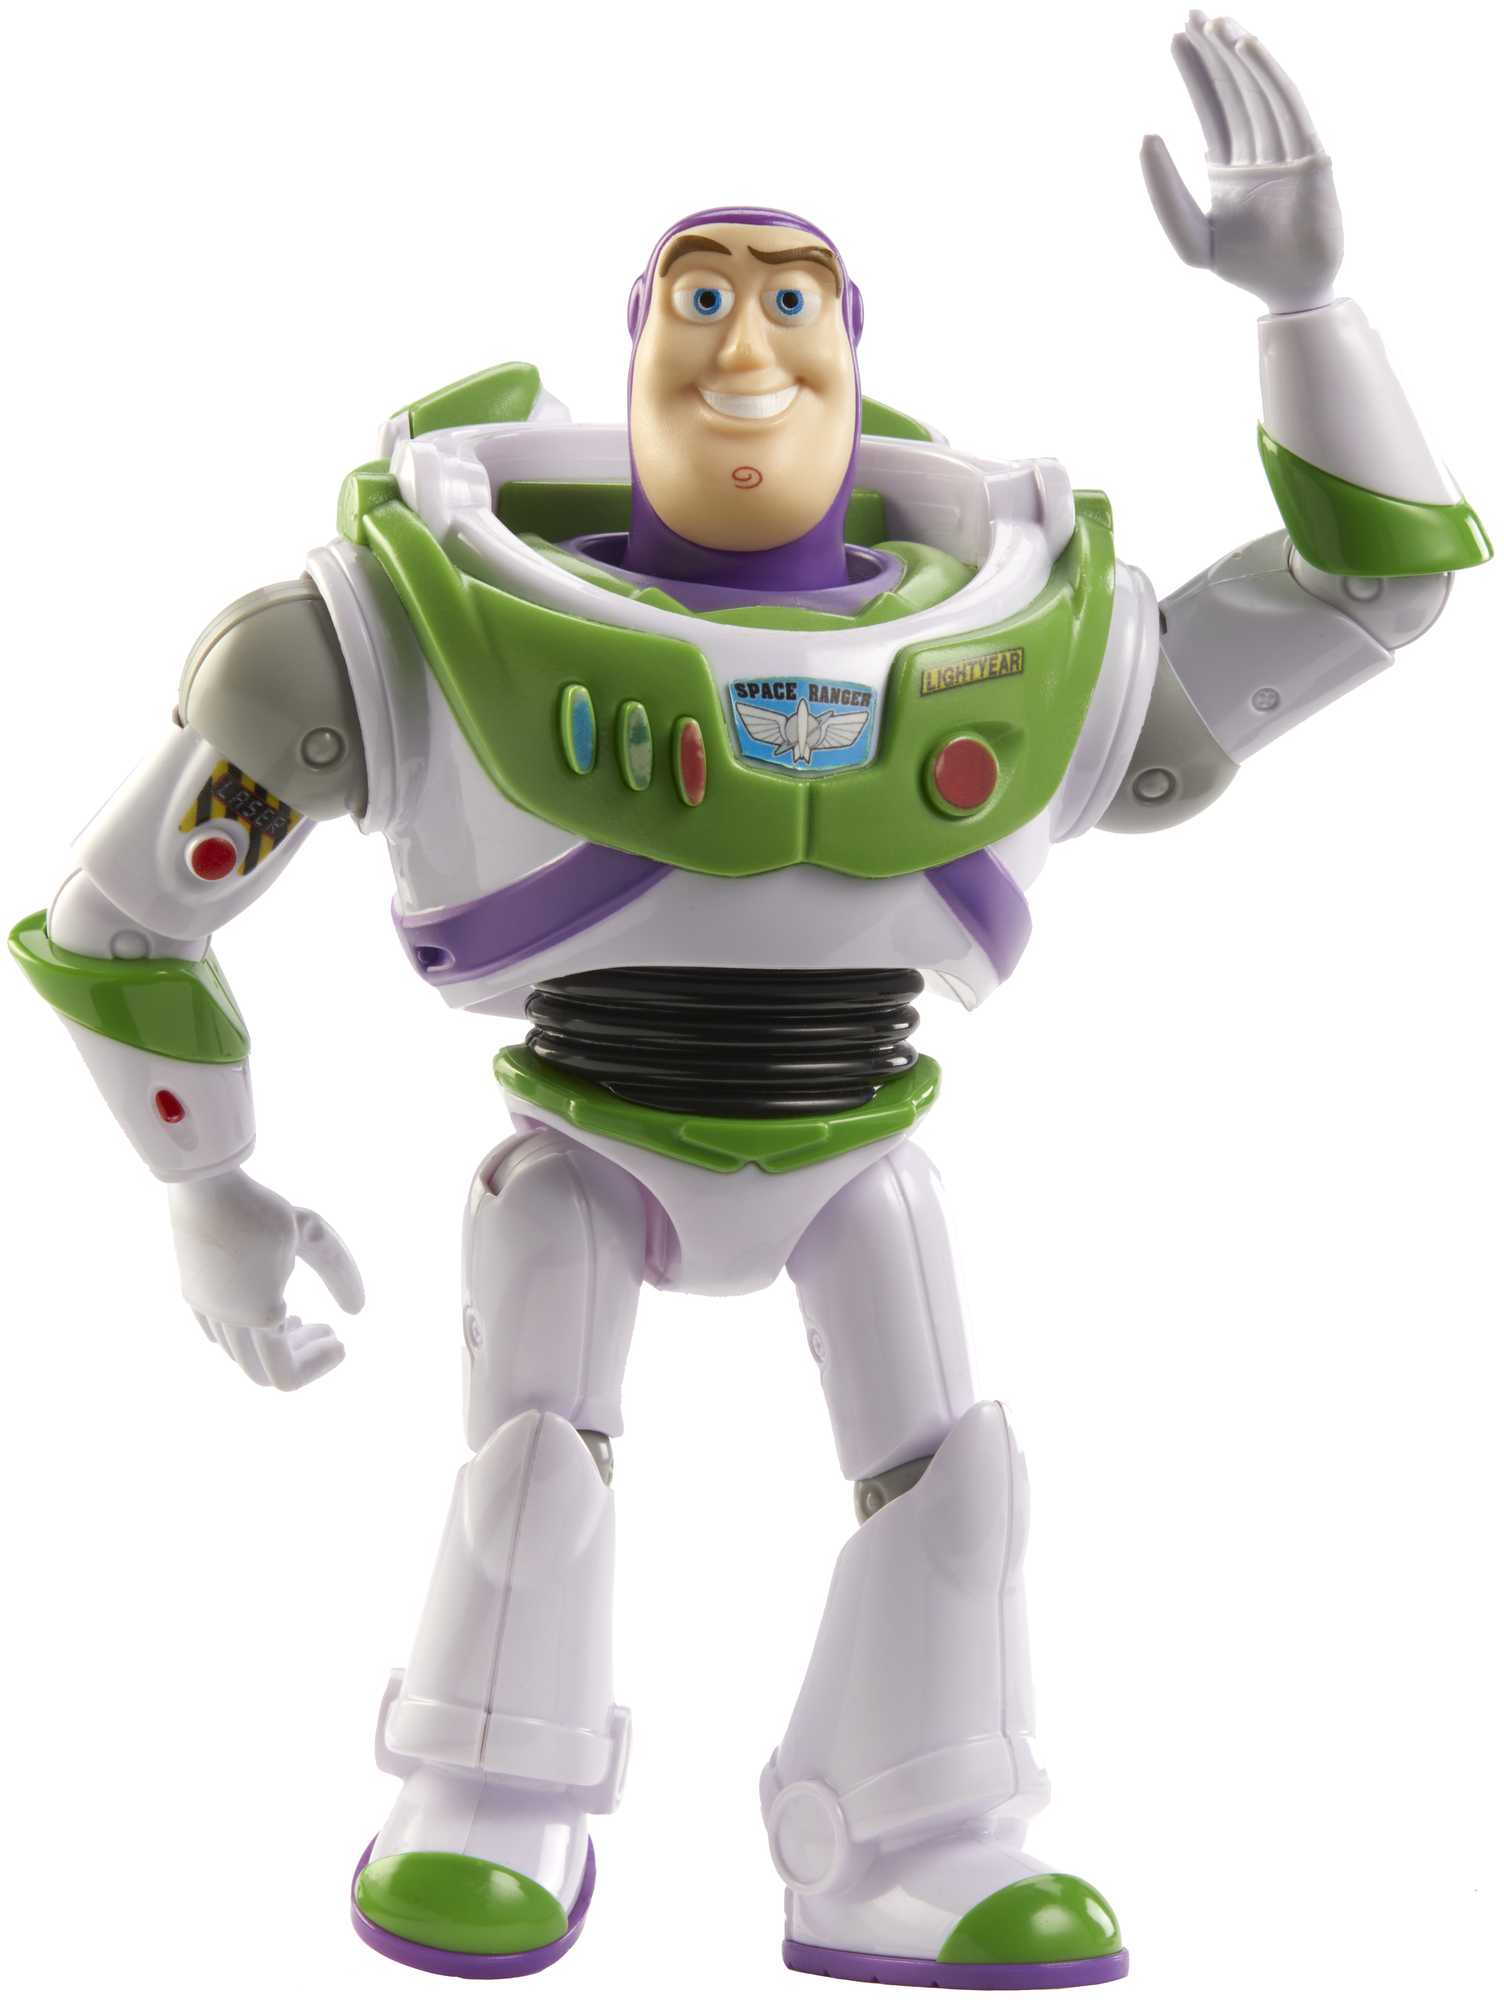 Disney Pixar Toy Story Buzz Lightyear Action Figure - image 1 of 6